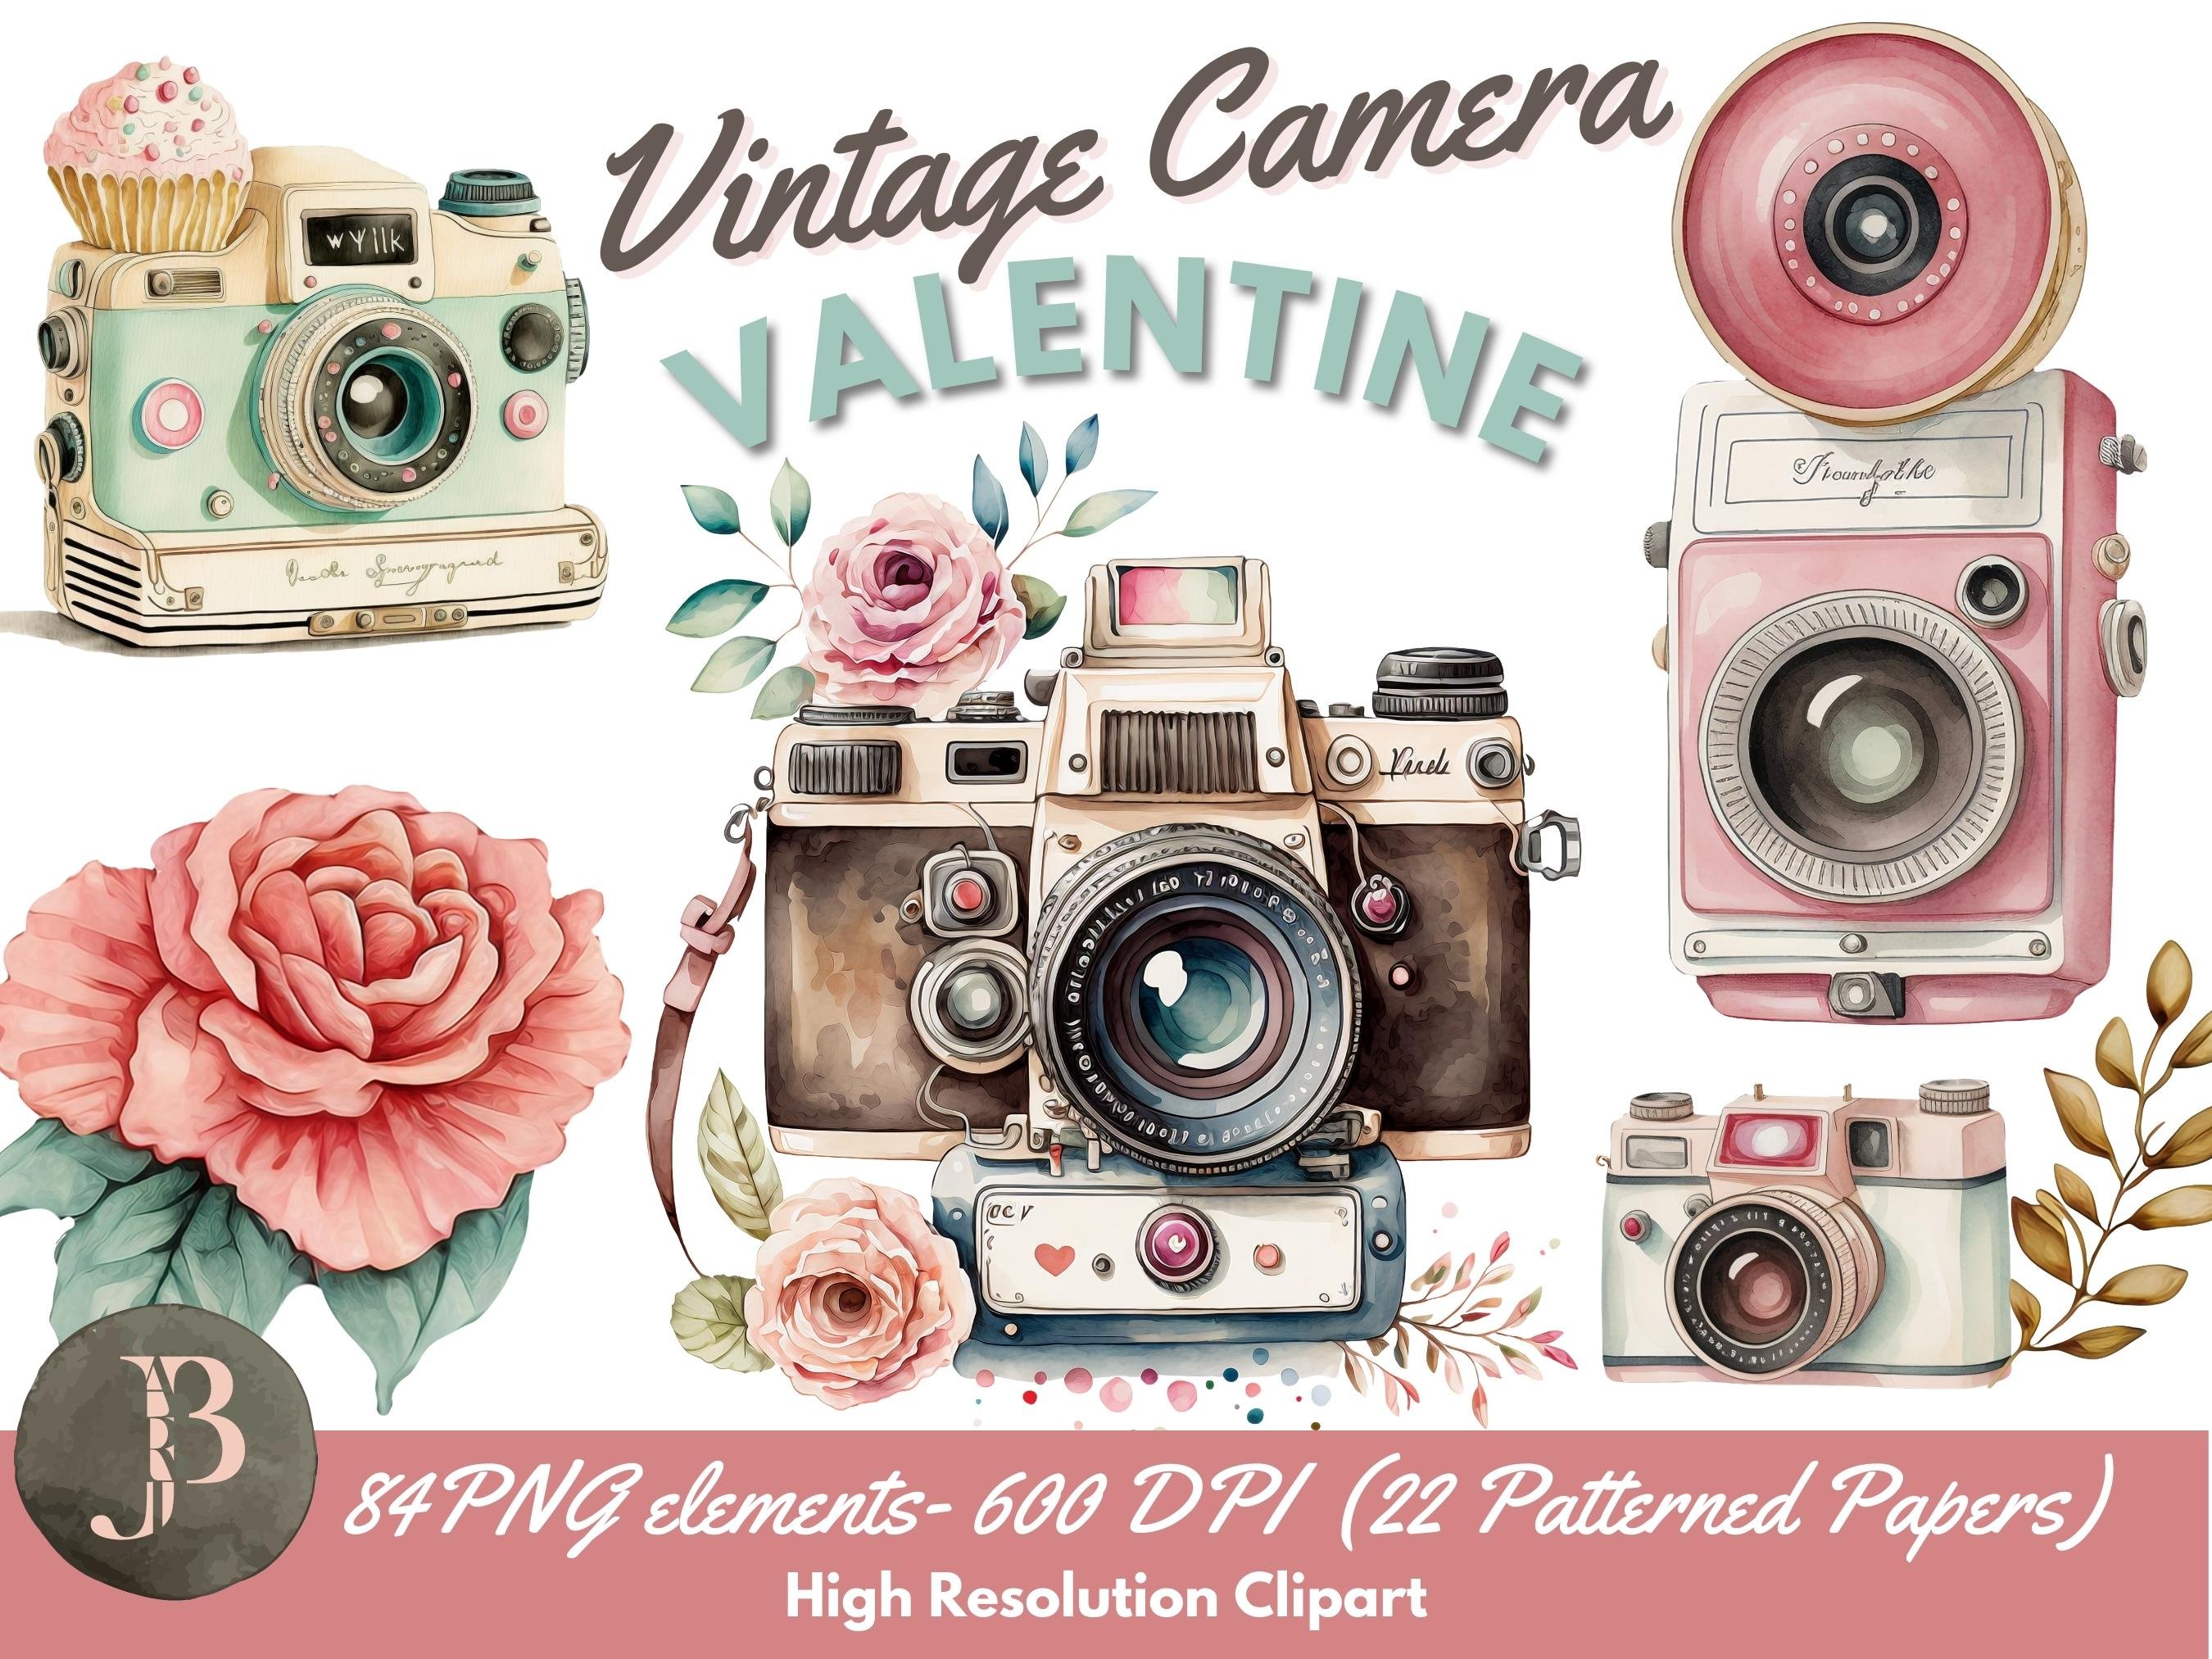 Vintage Camera Valentine Clipart cover image.